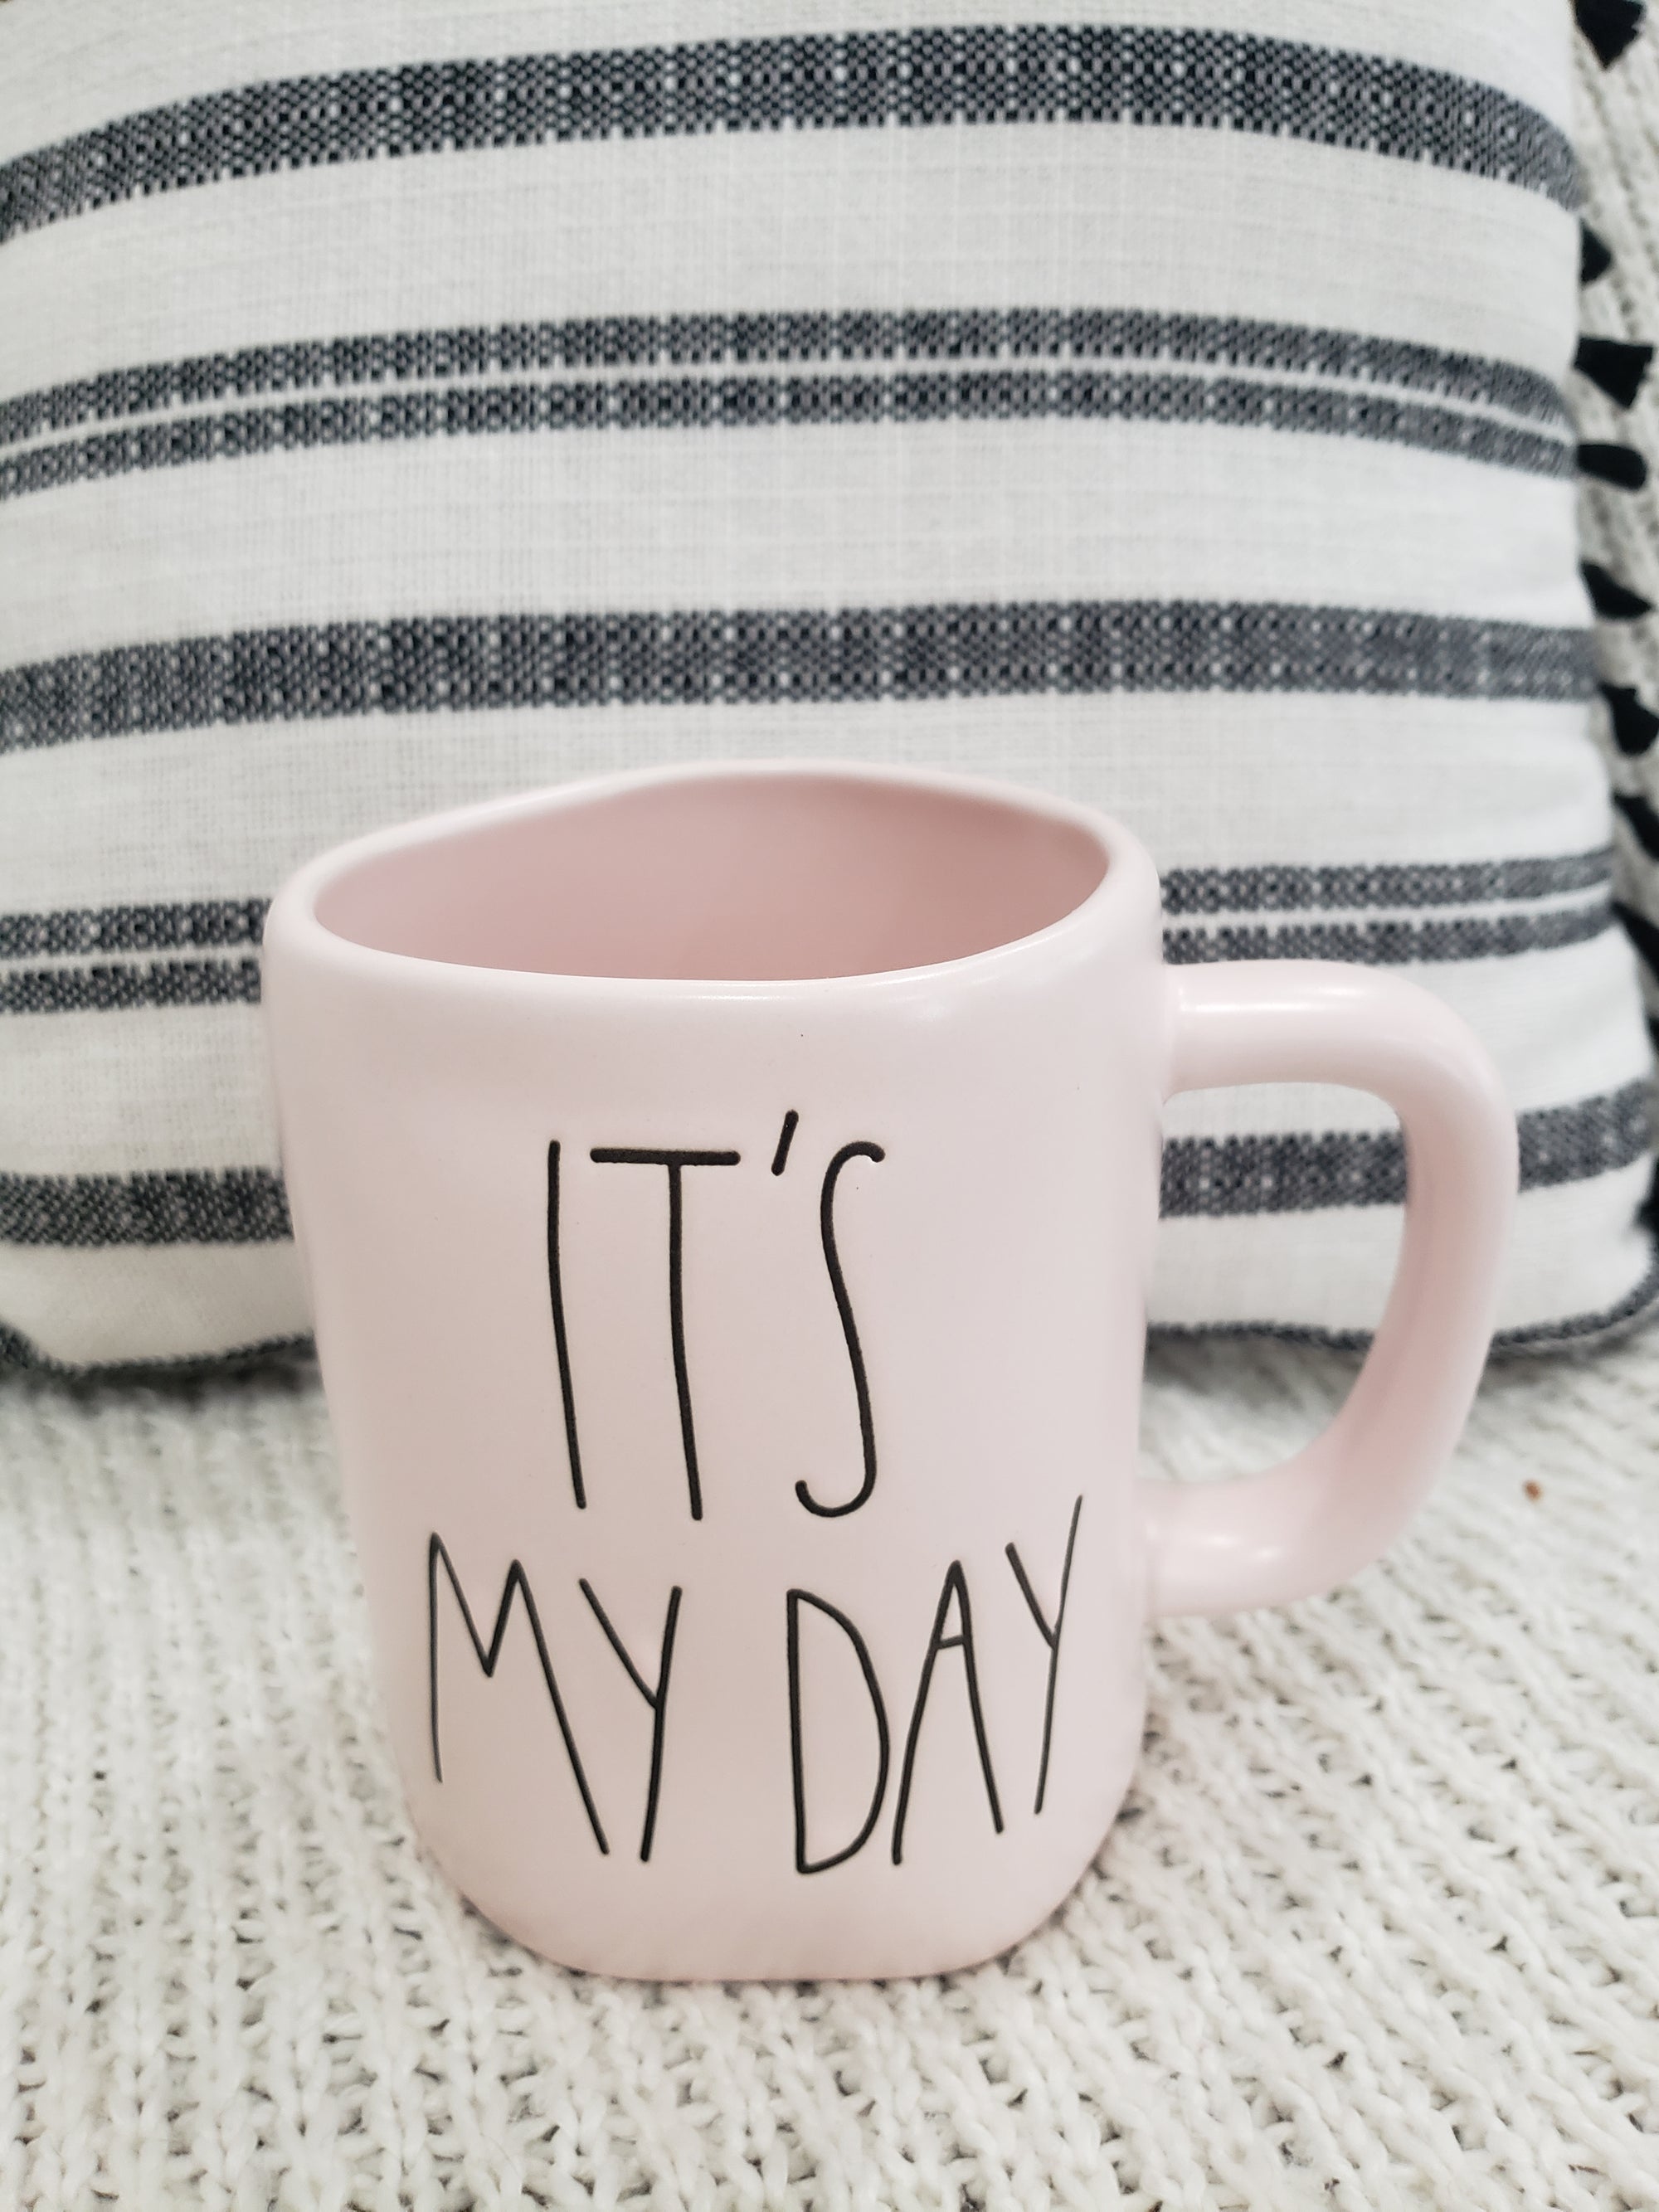 Rae Dunn "It's My Day" Powder Pink Mug Collection